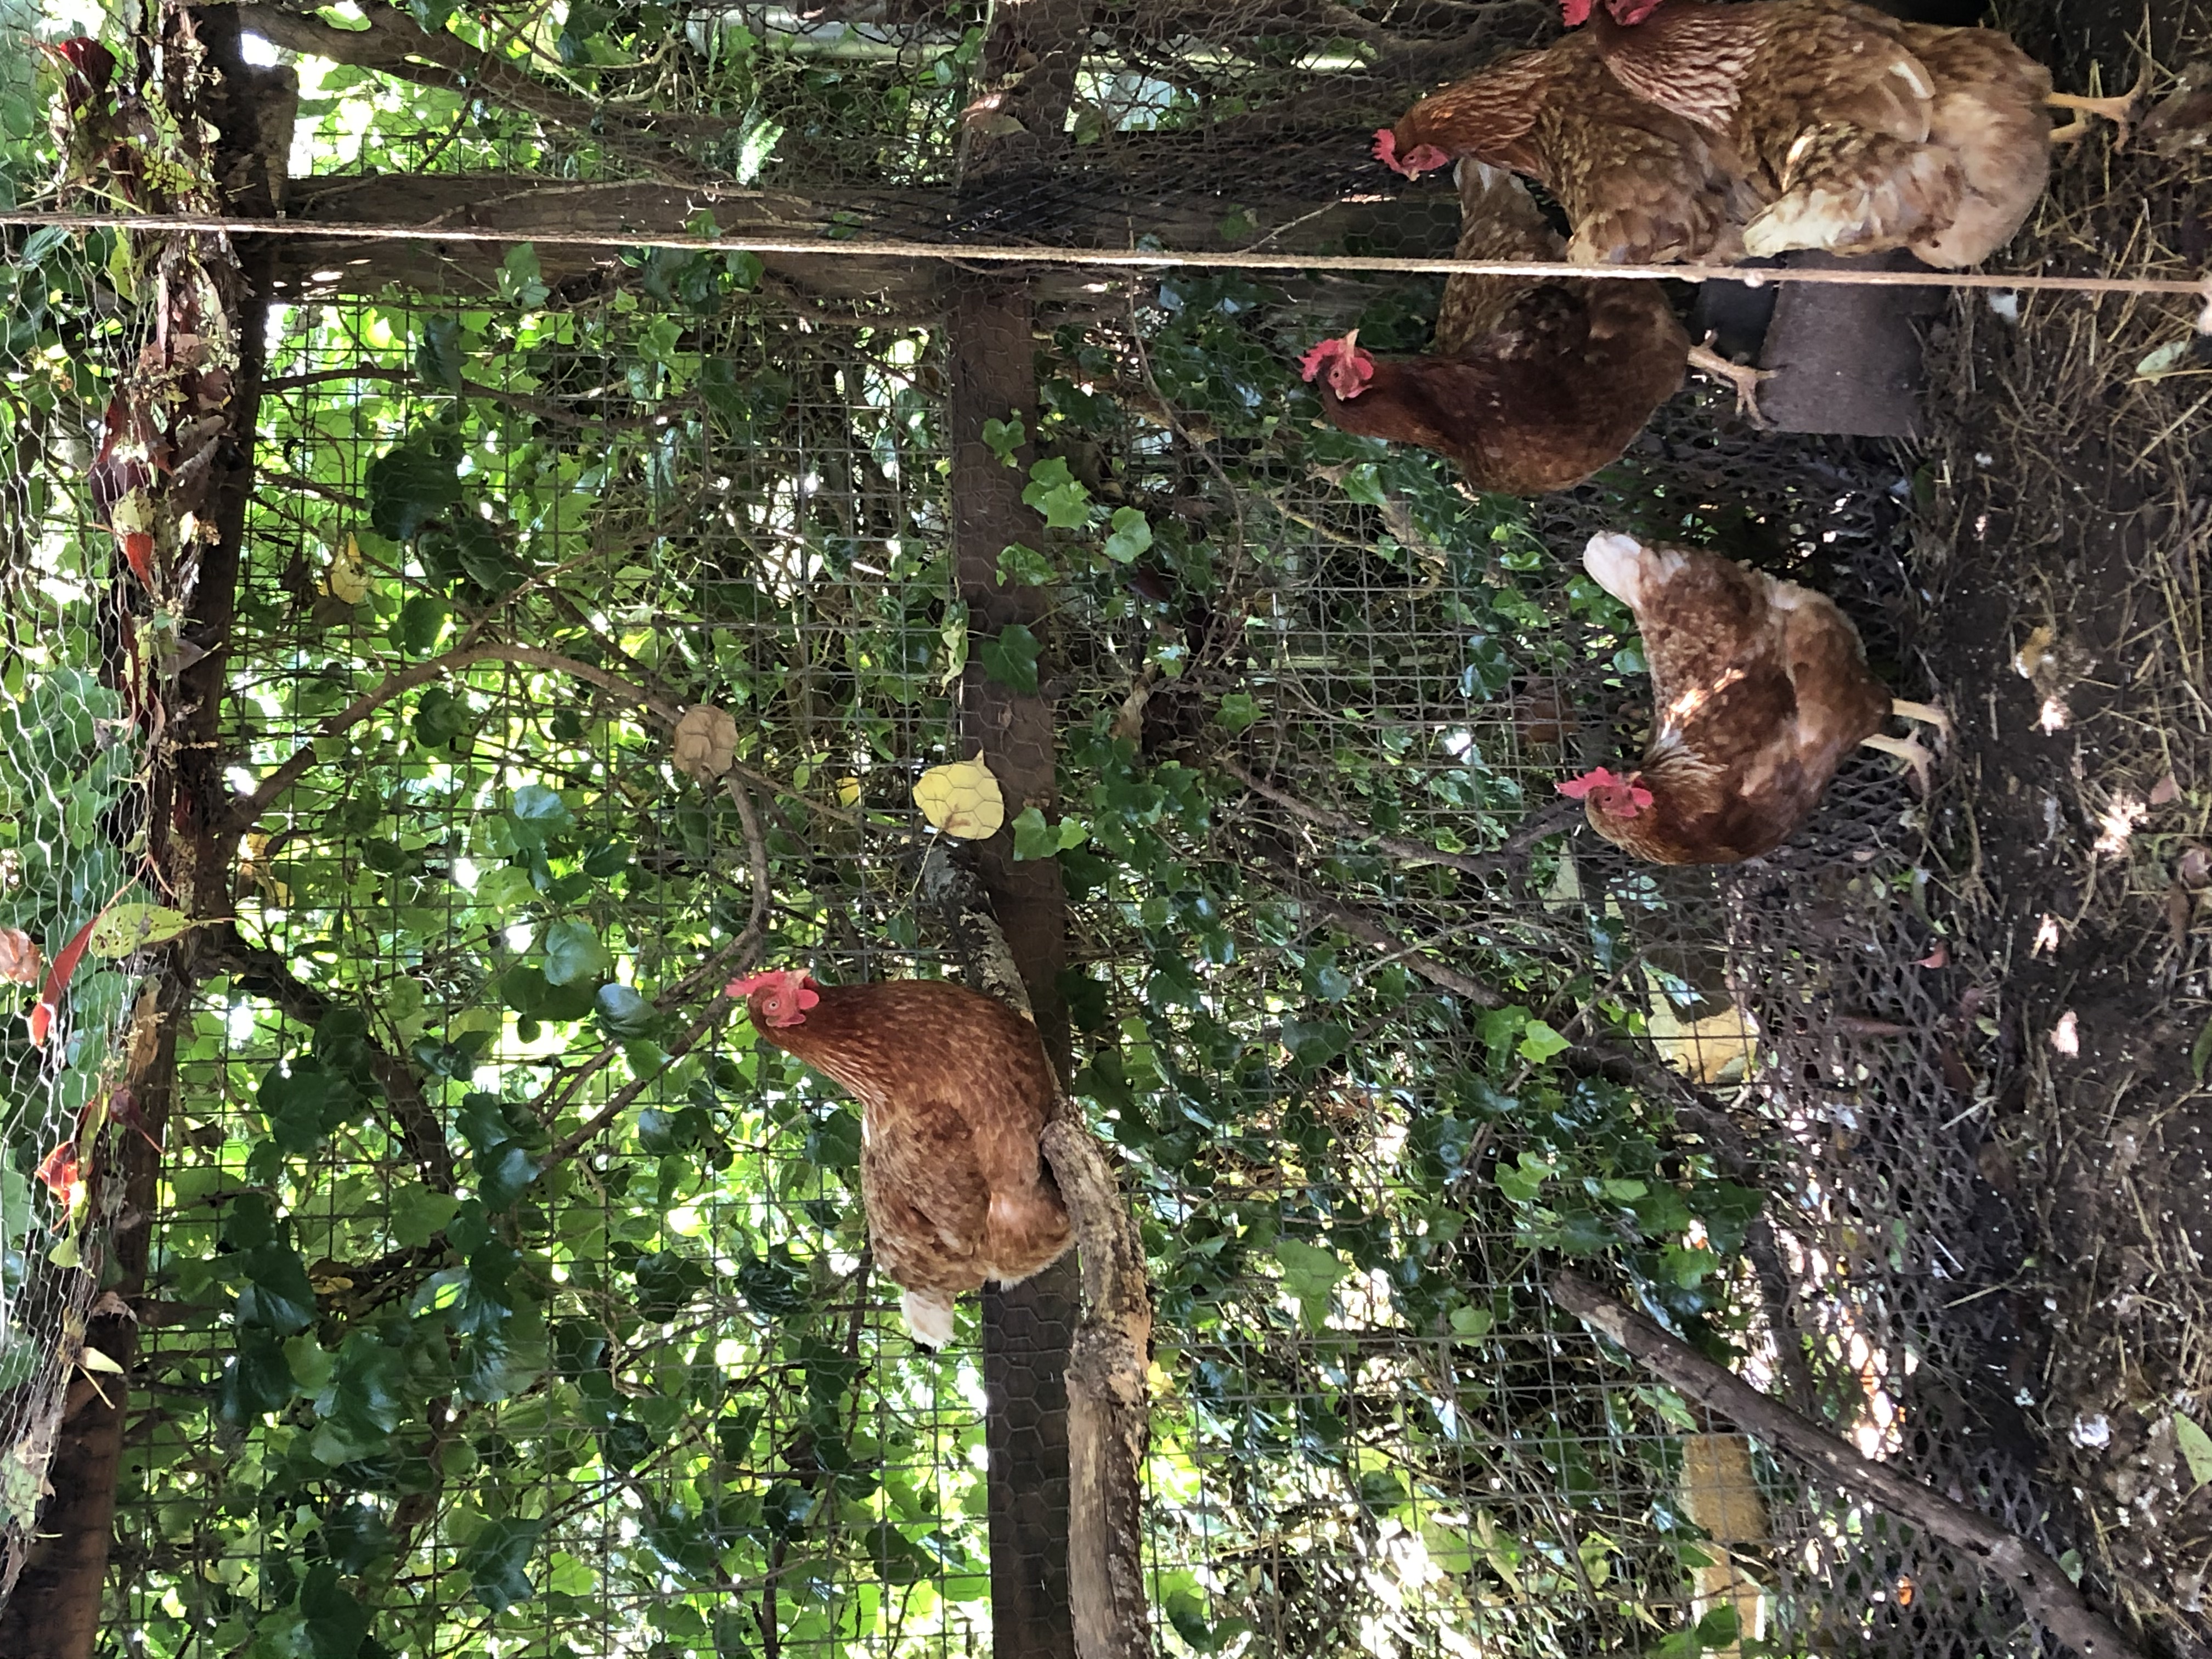 My five beautiful hens